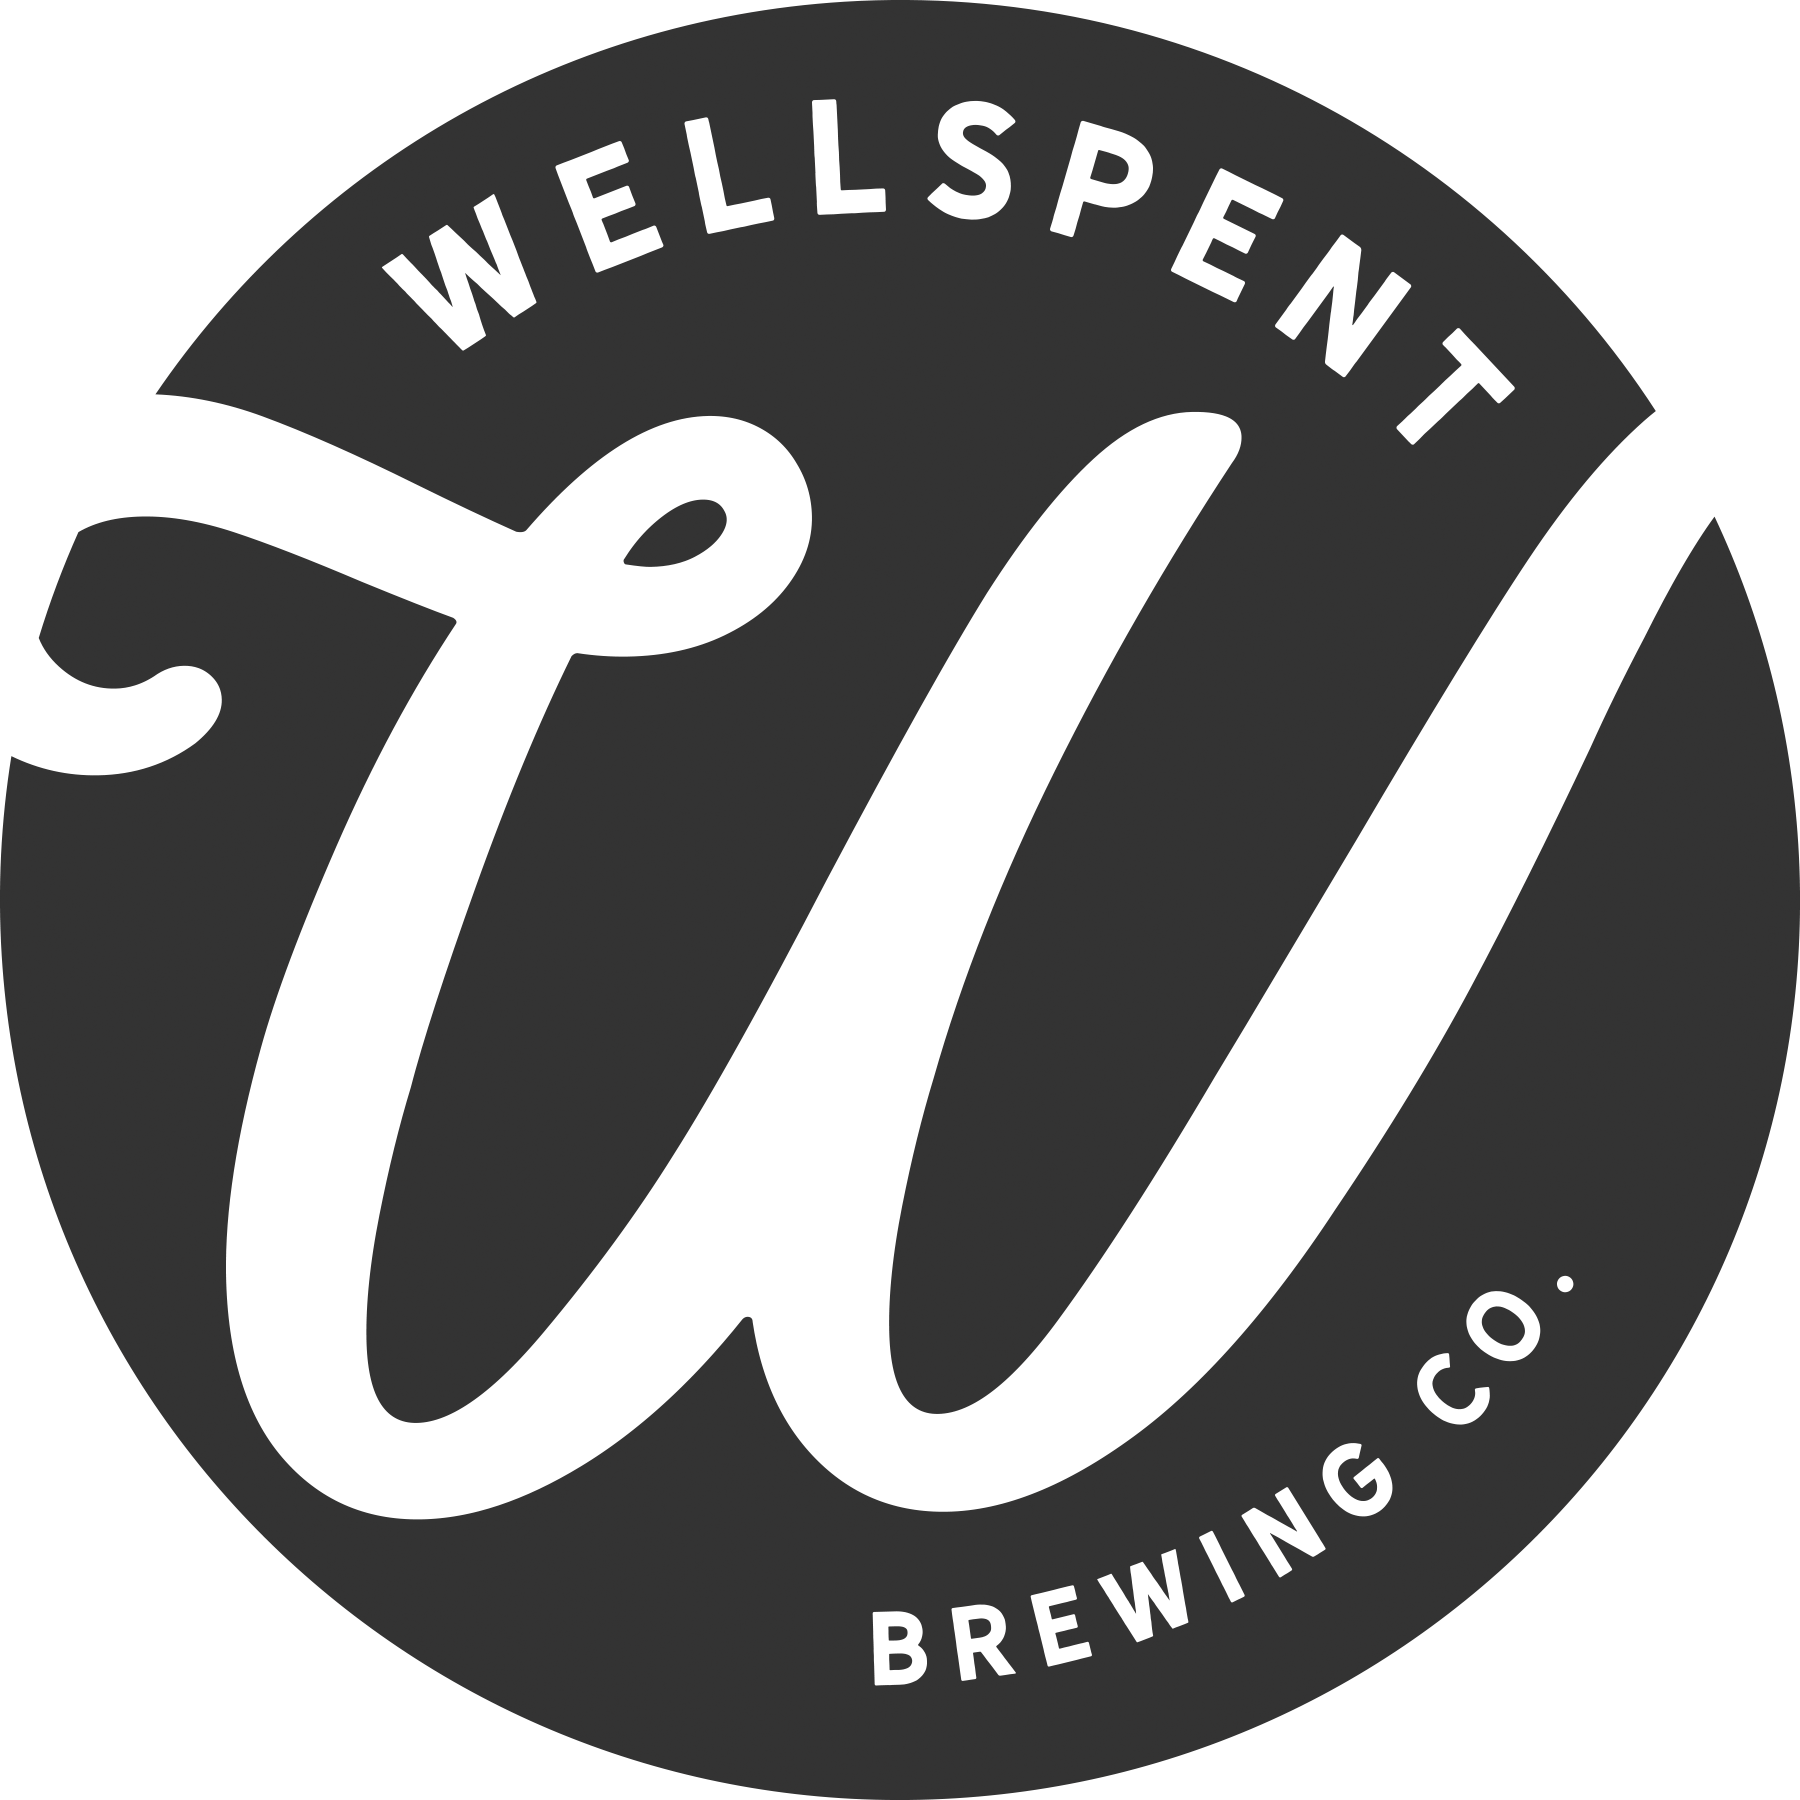 Wellspent Brewing Co.